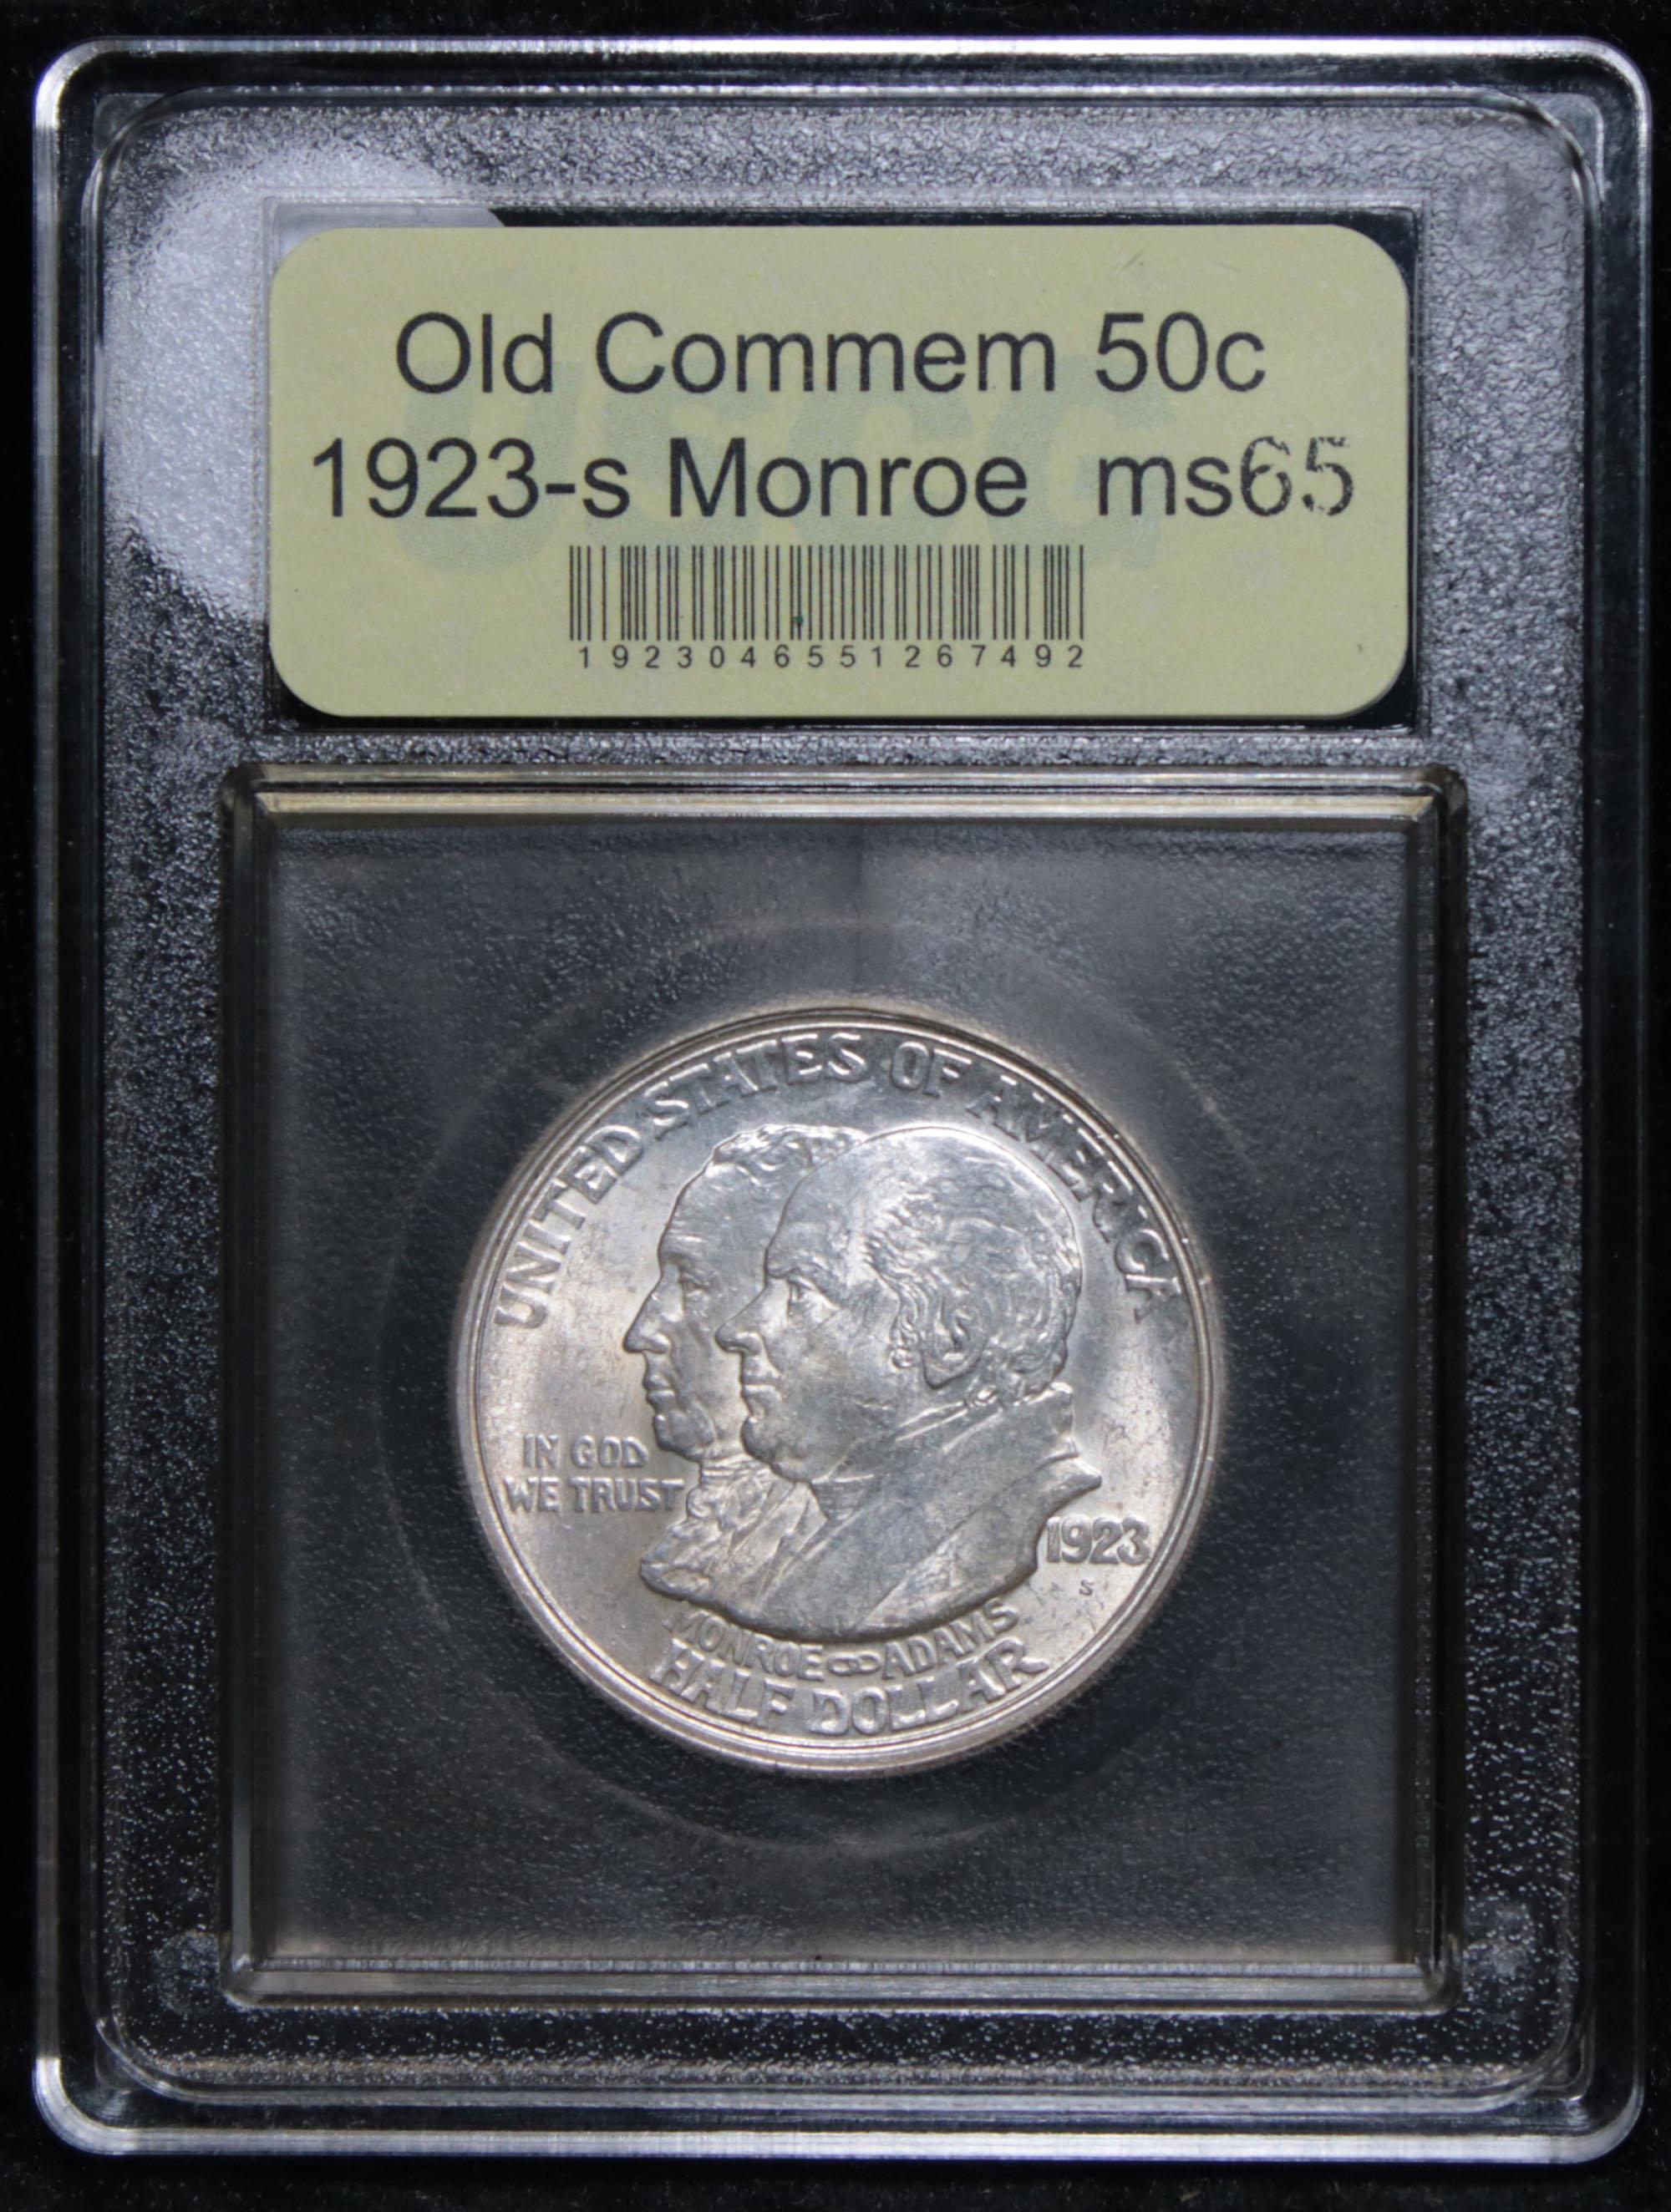 ***Auction Highlight*** 1923-s Monroe Old Commem Half Dollar 50c Graded GEM Unc by USCG (fc)